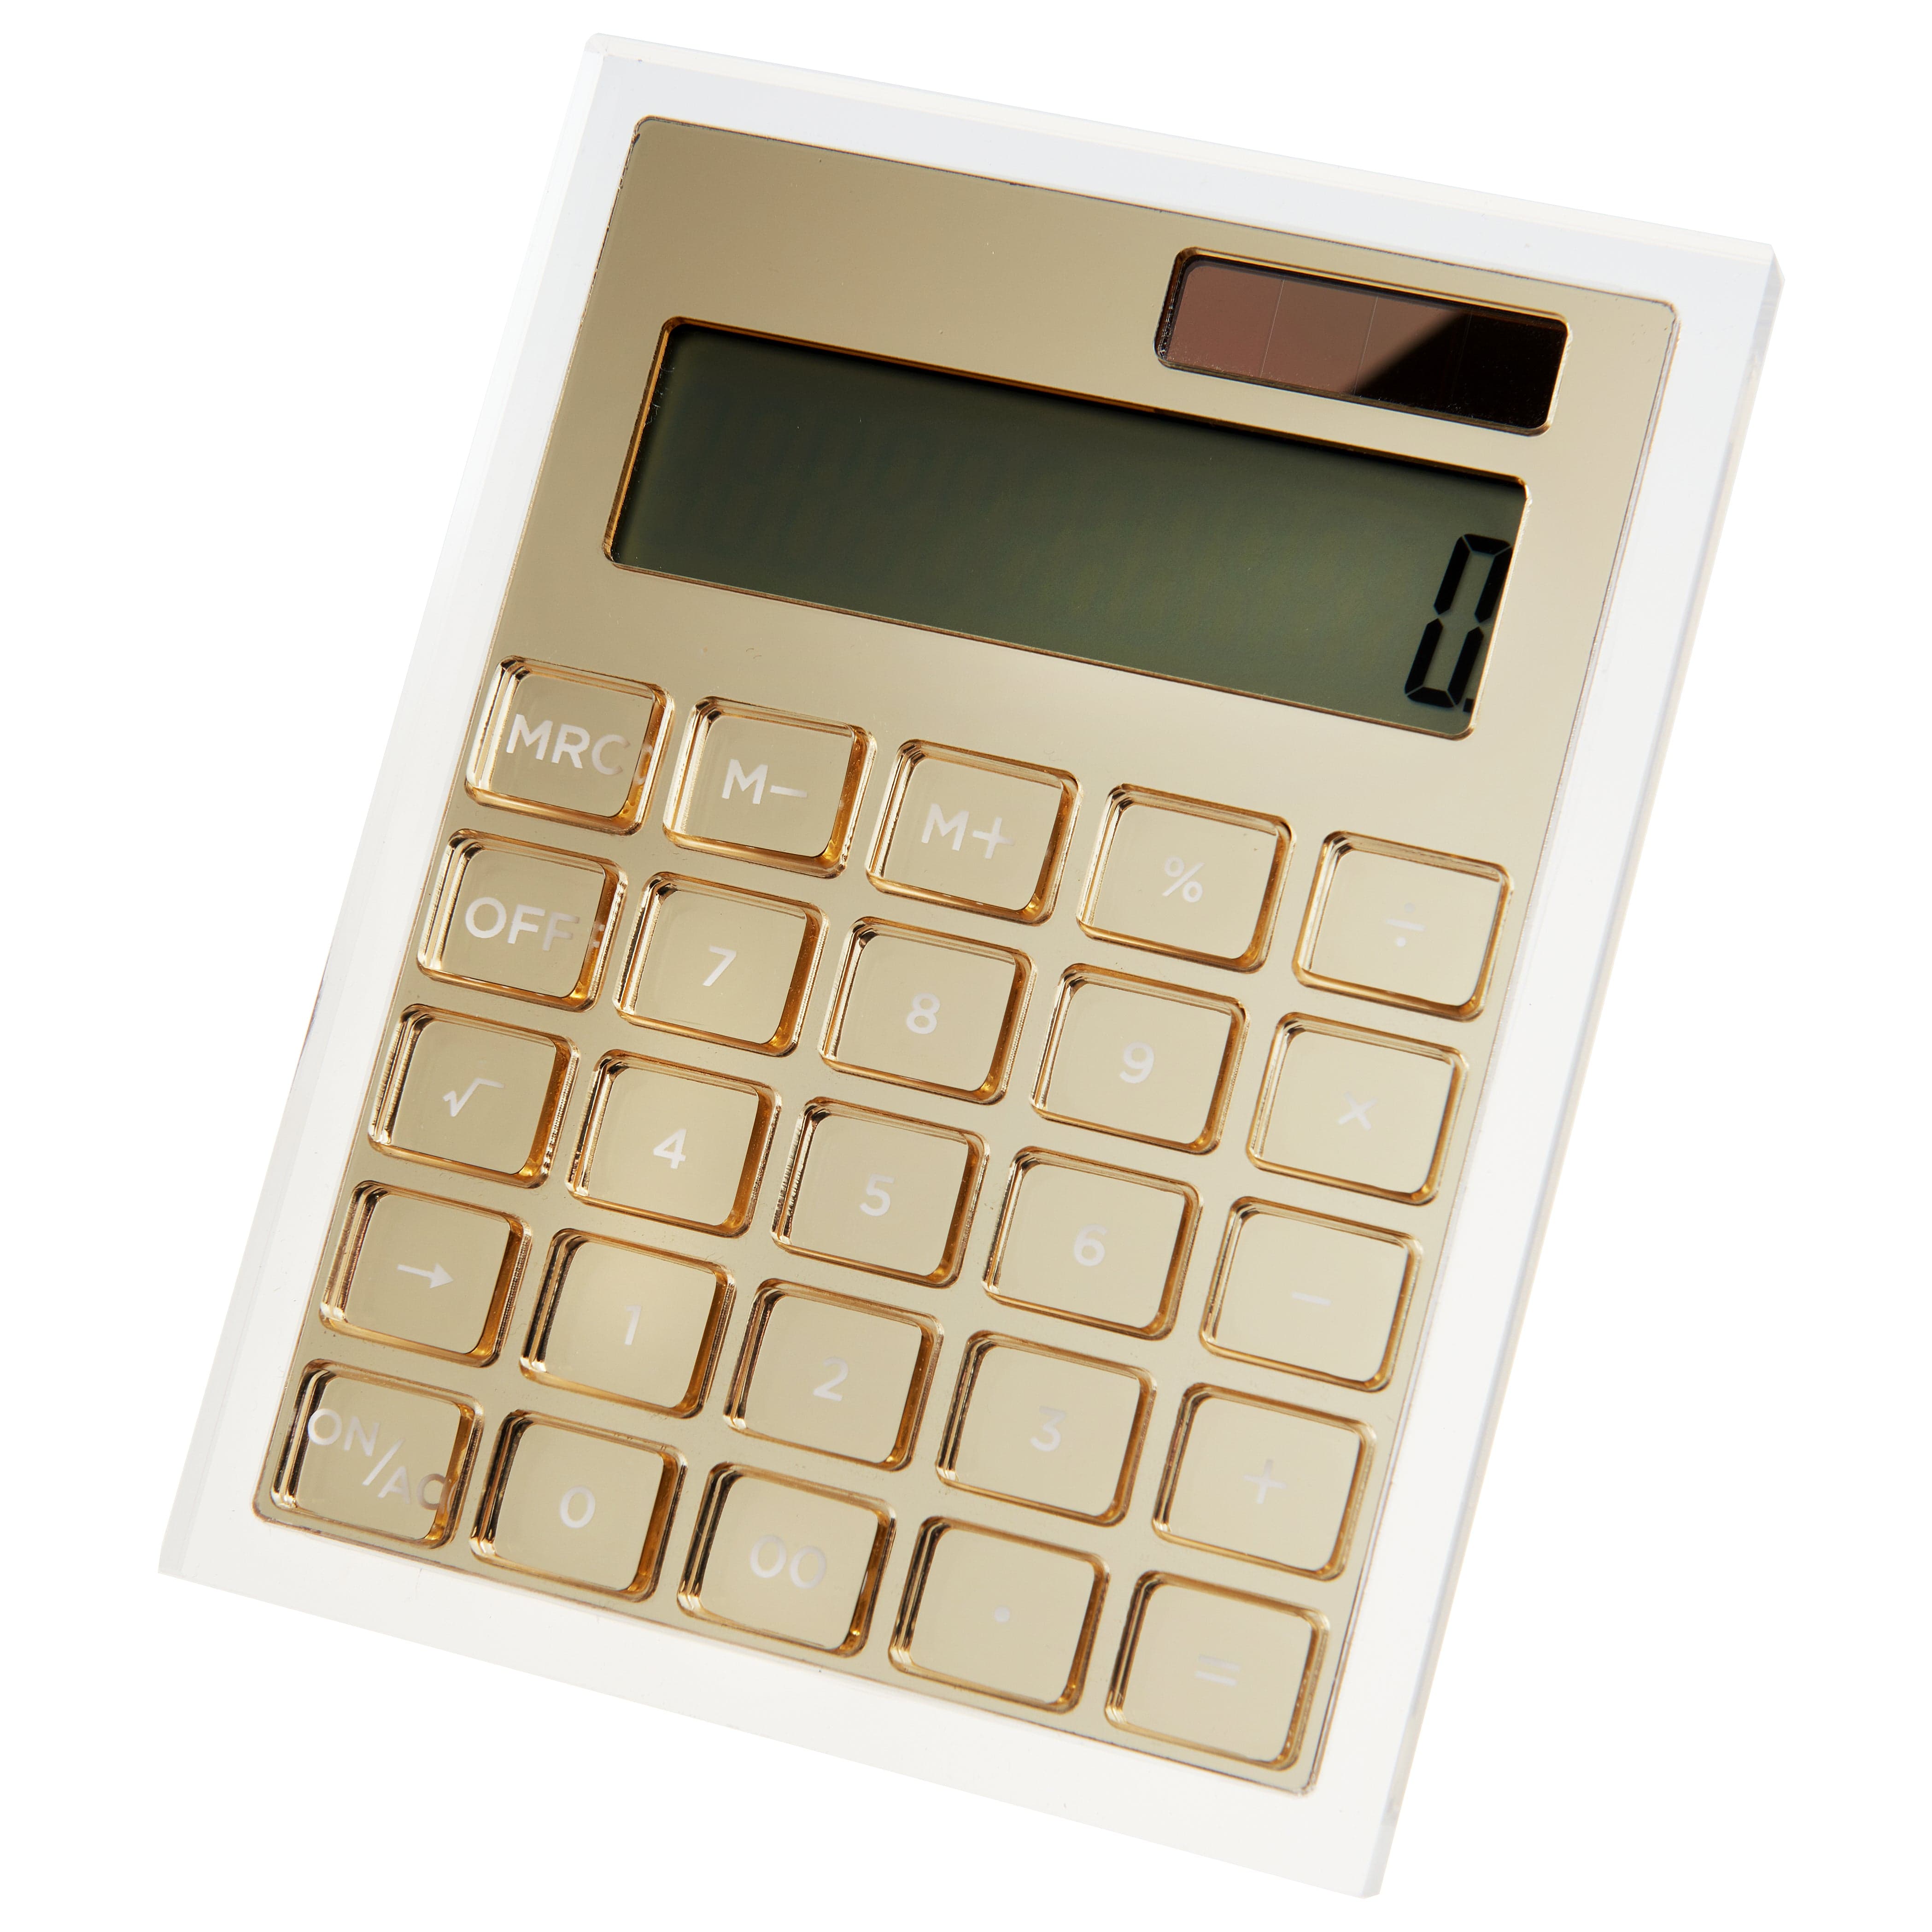 Gold Acrylic Desktop Accessory Bundle including Calculator, Tape Dispenser,  Scissor and Stapler (53700)